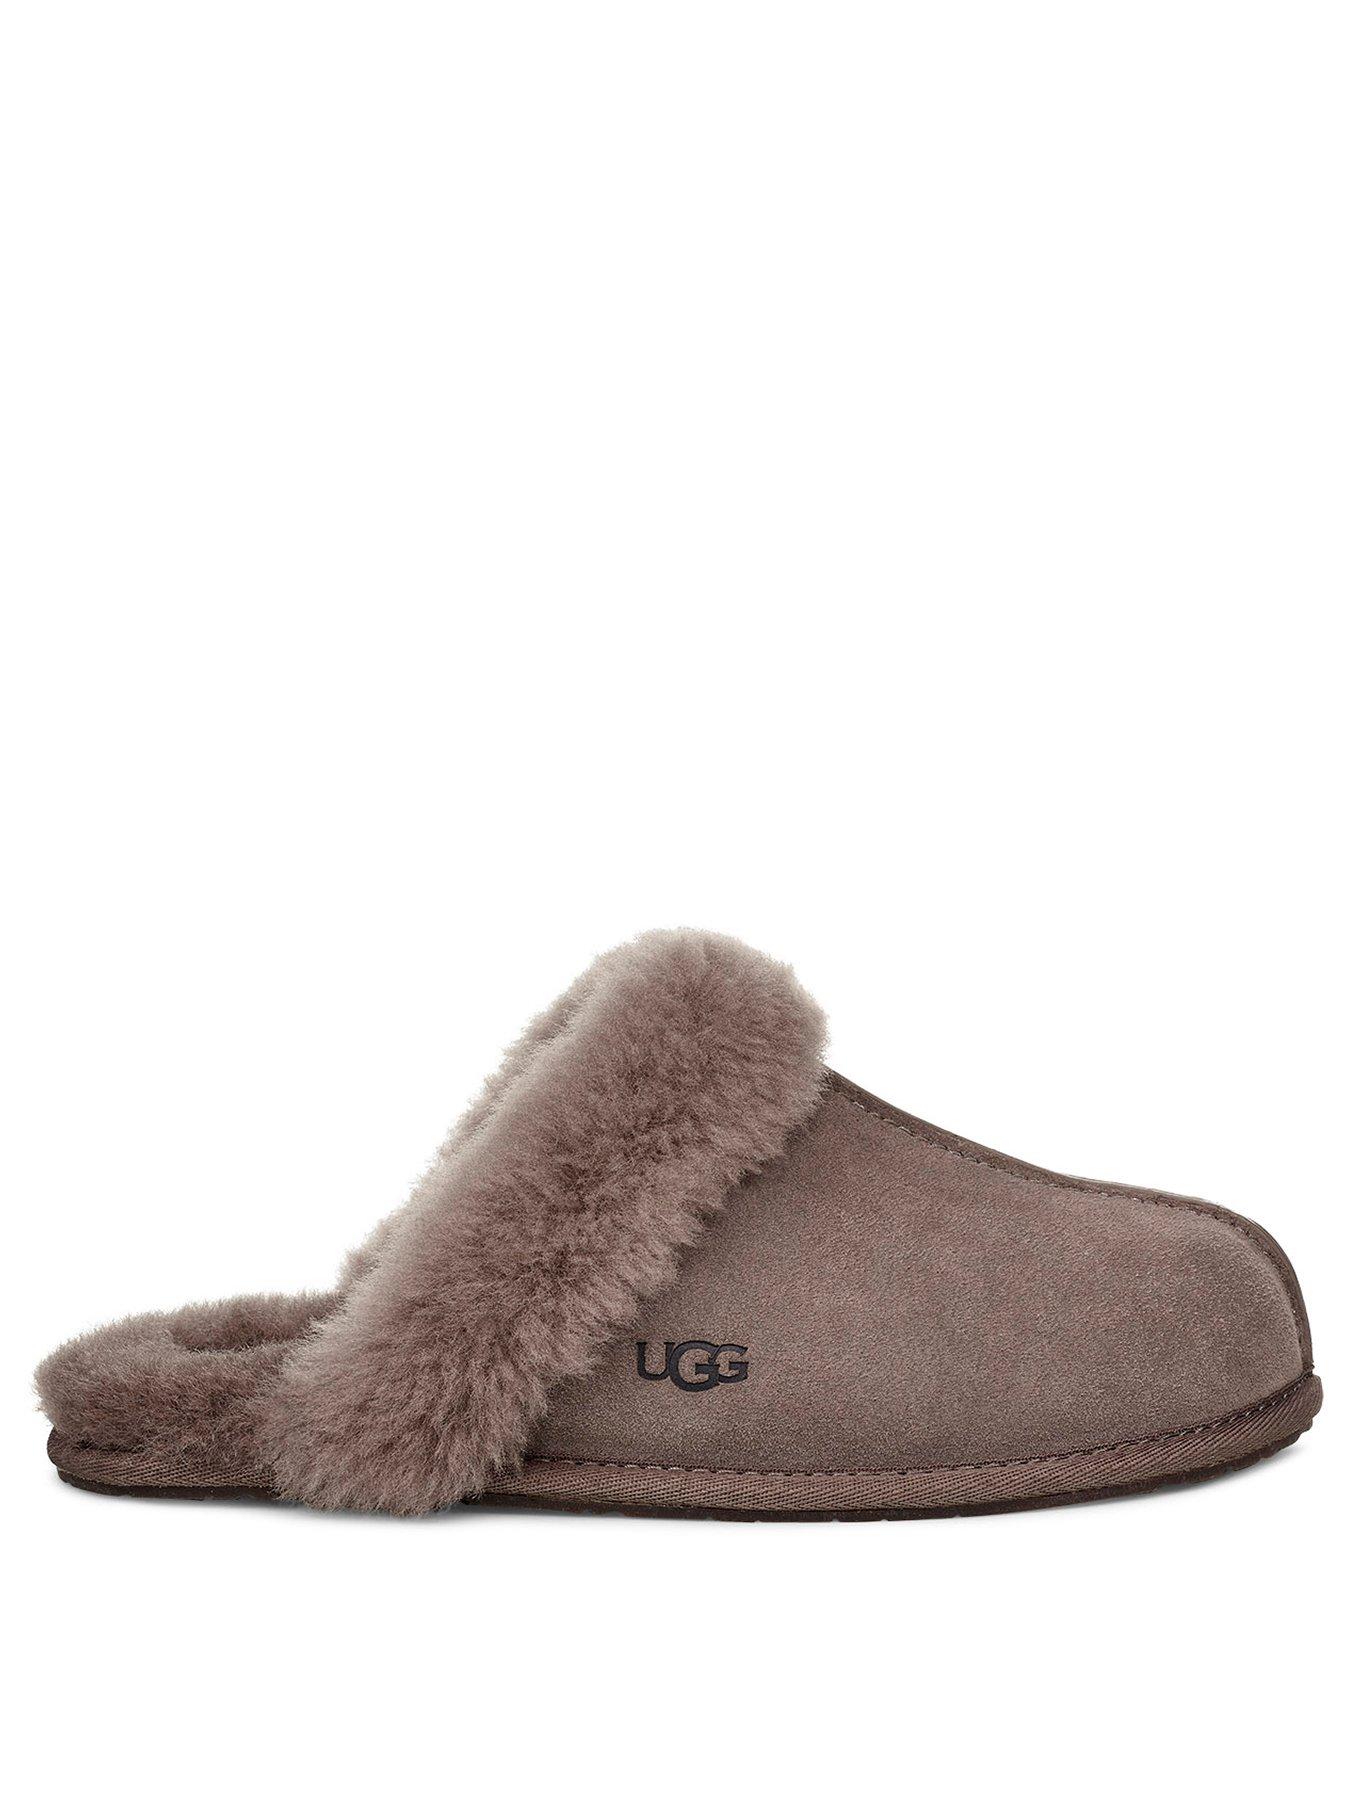 littlewoods ugg slippers